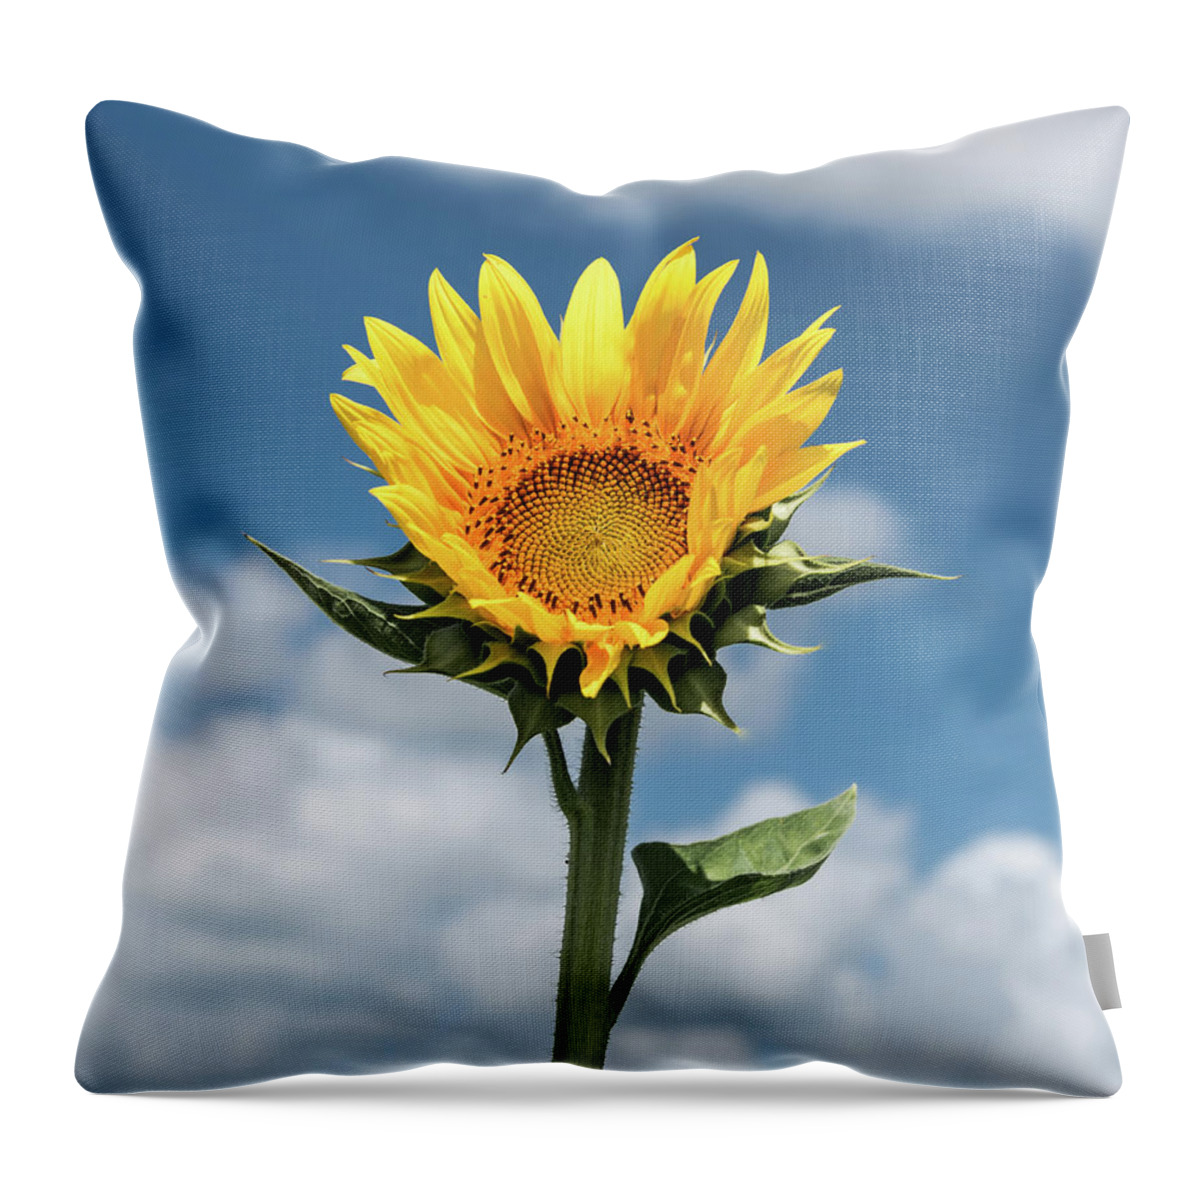 Sunflower Throw Pillow featuring the photograph Sunflower by Jaime Mercado